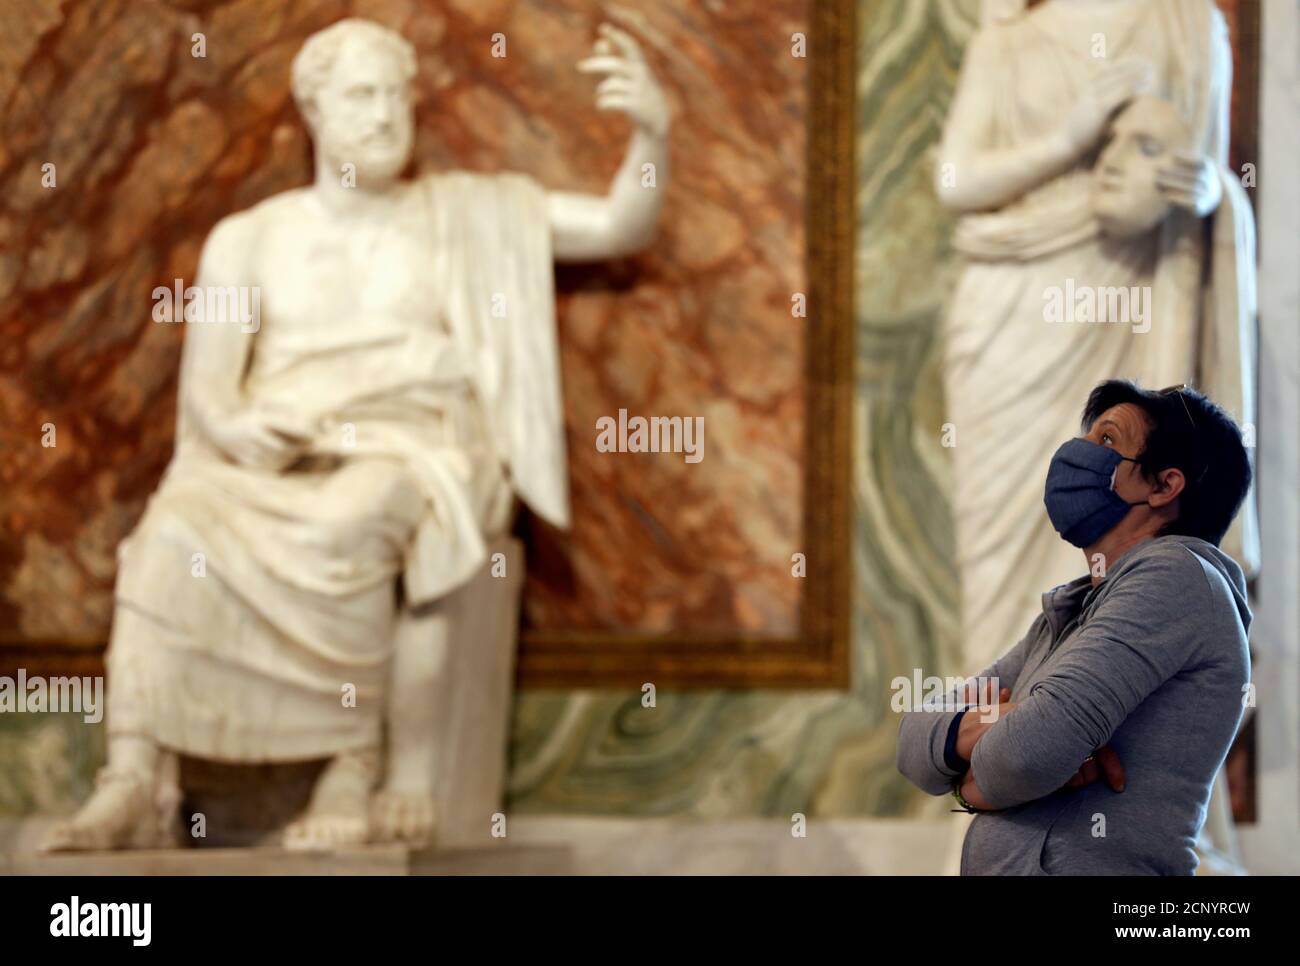 Galleria borghese rome fotografías e imágenes de alta resolución - Página  10 - Alamy